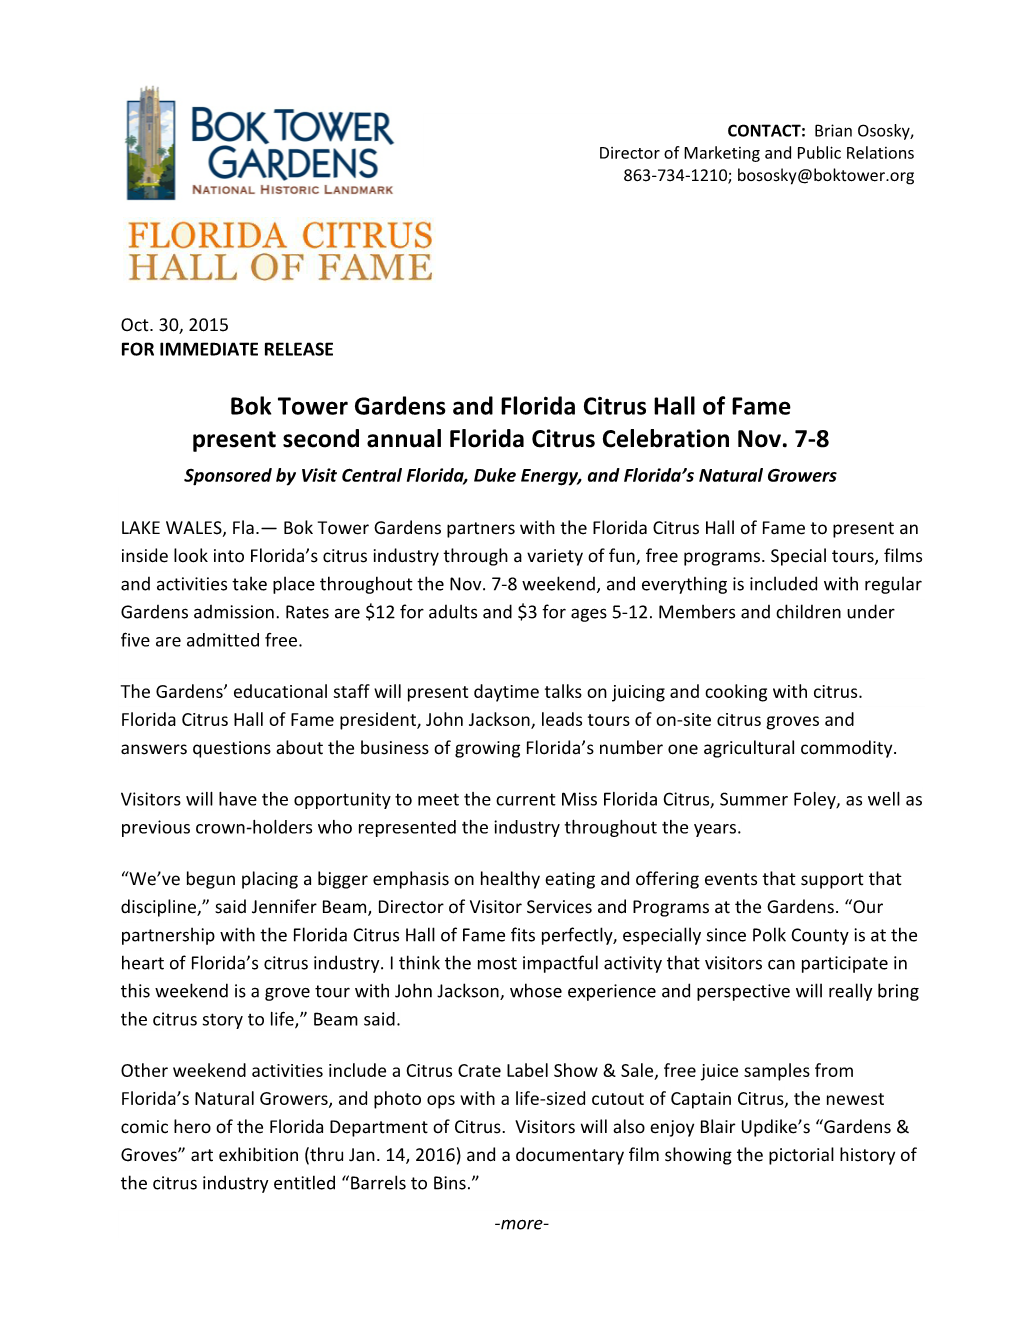 Bok Tower Gardens and Florida Citrus Hall of Fame Present Second Annual Florida Citrus Celebration Nov